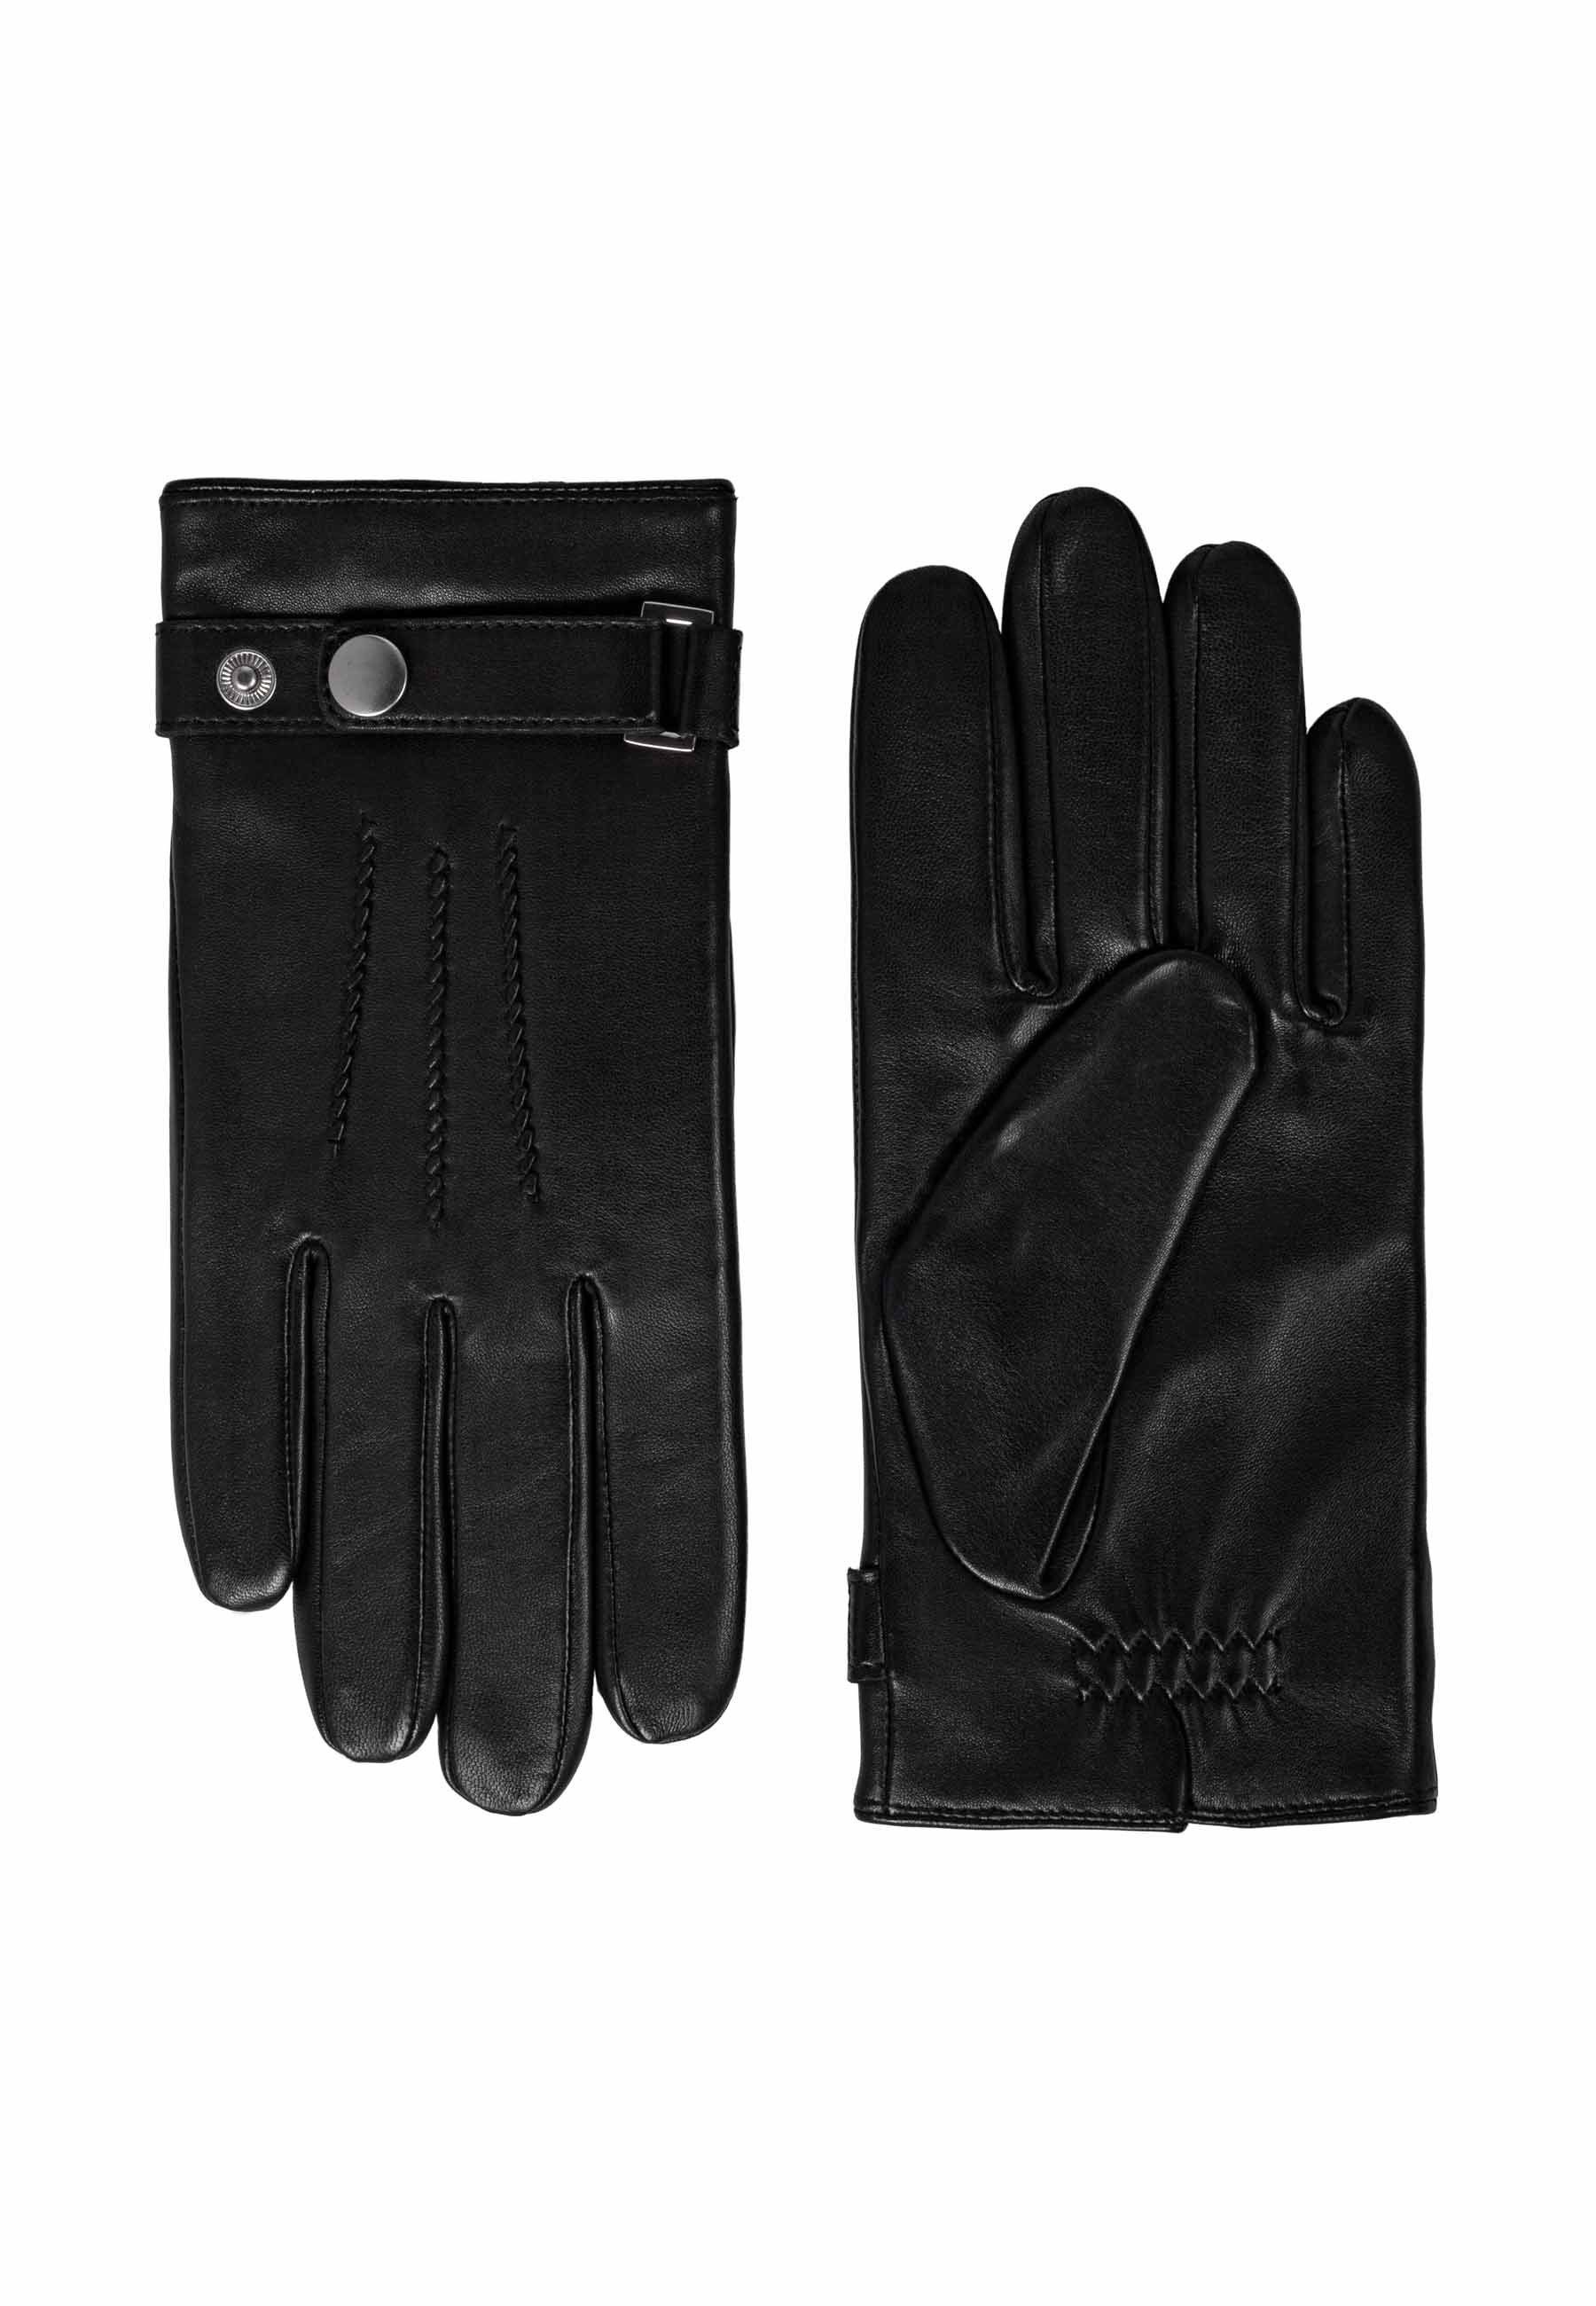 Lederhandschuhe Herrenhandschuh ok Diego black 001 Gloves